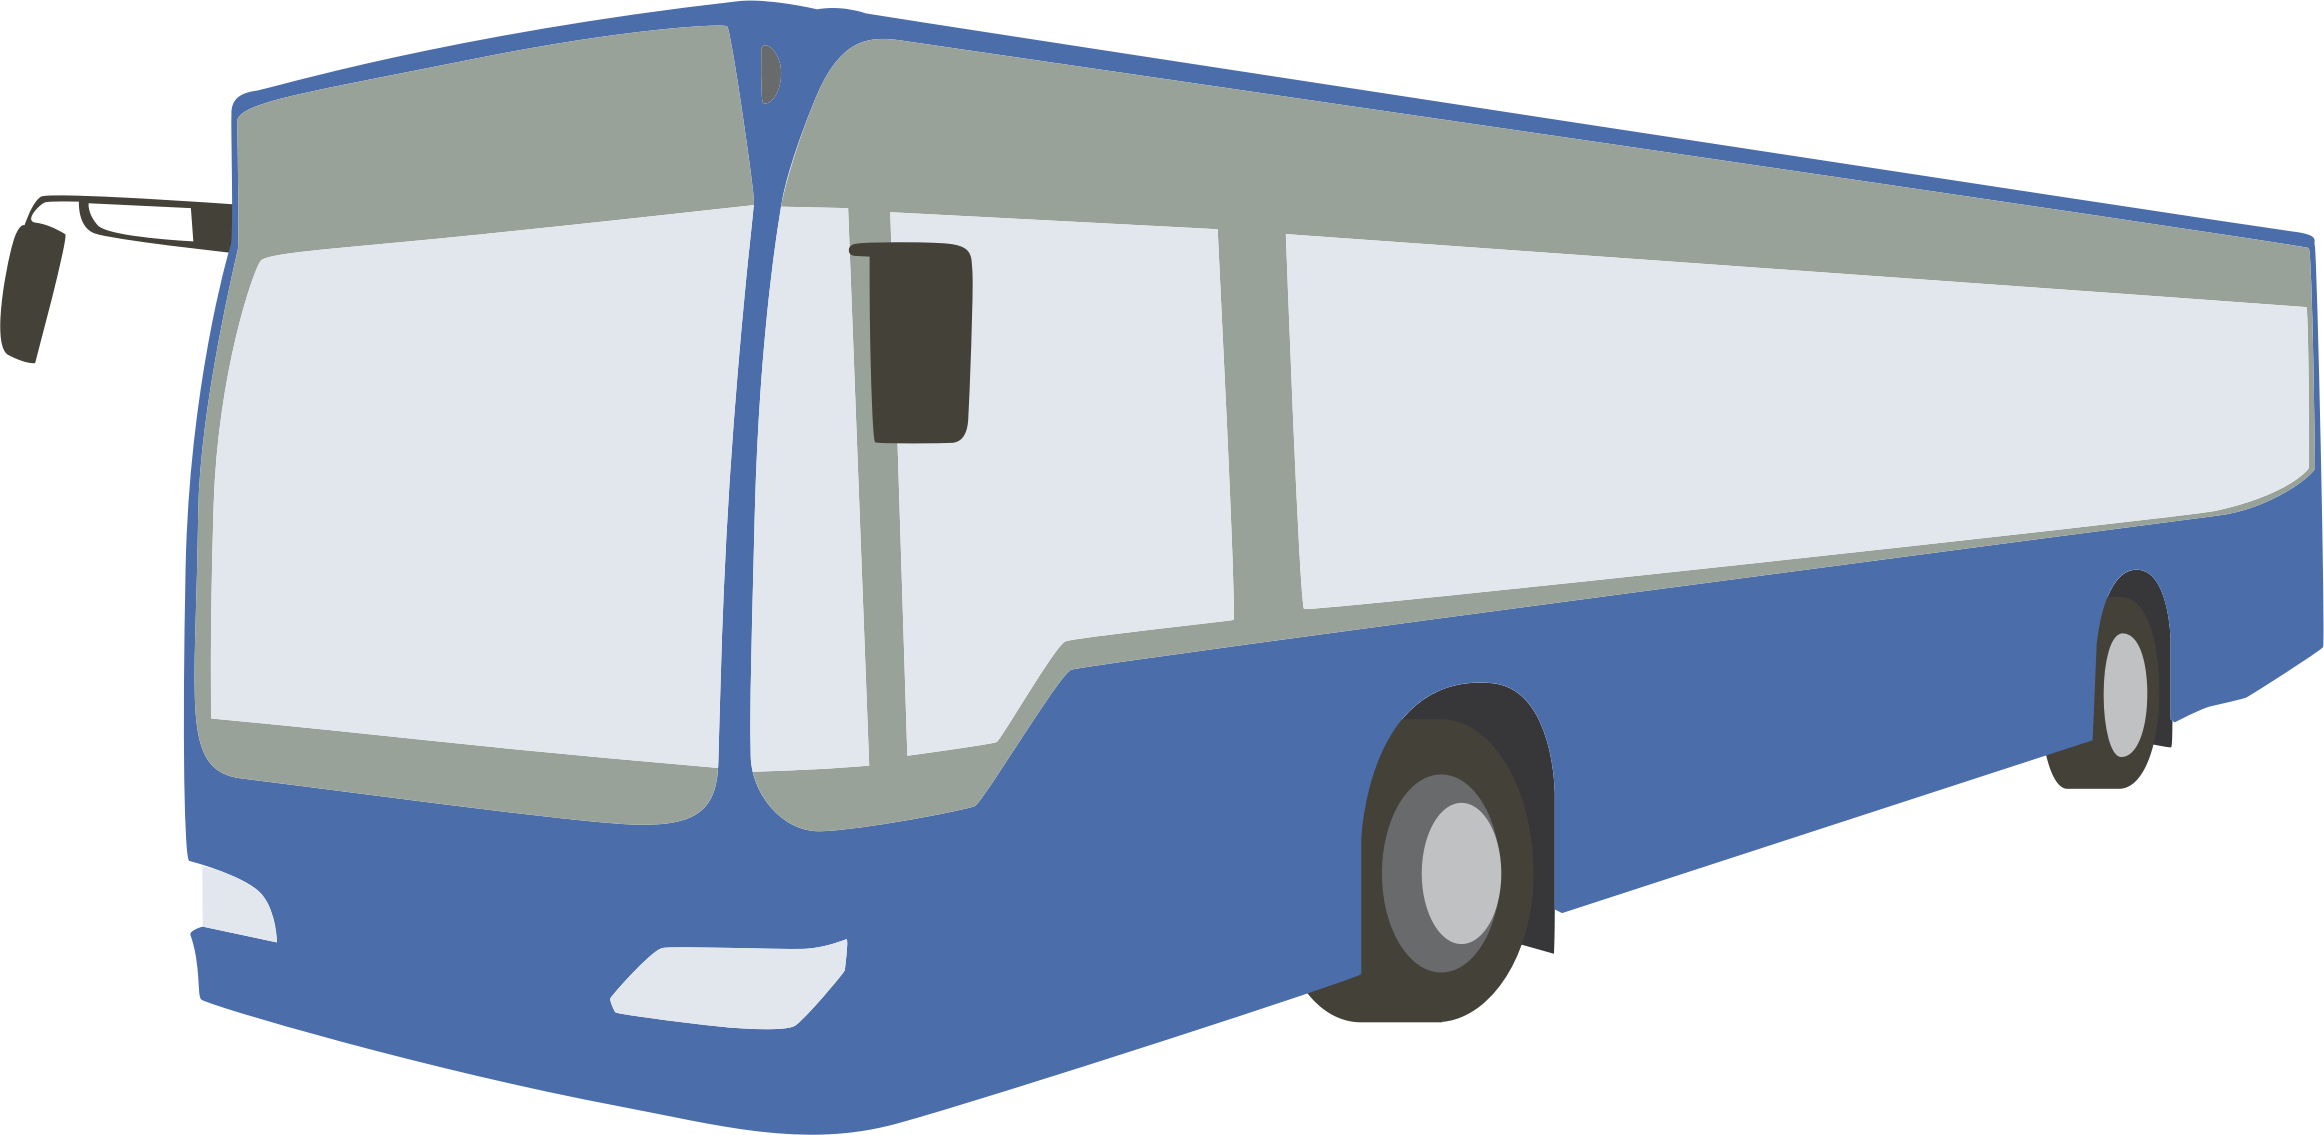 Blue bus big image. Transportation clipart public transport